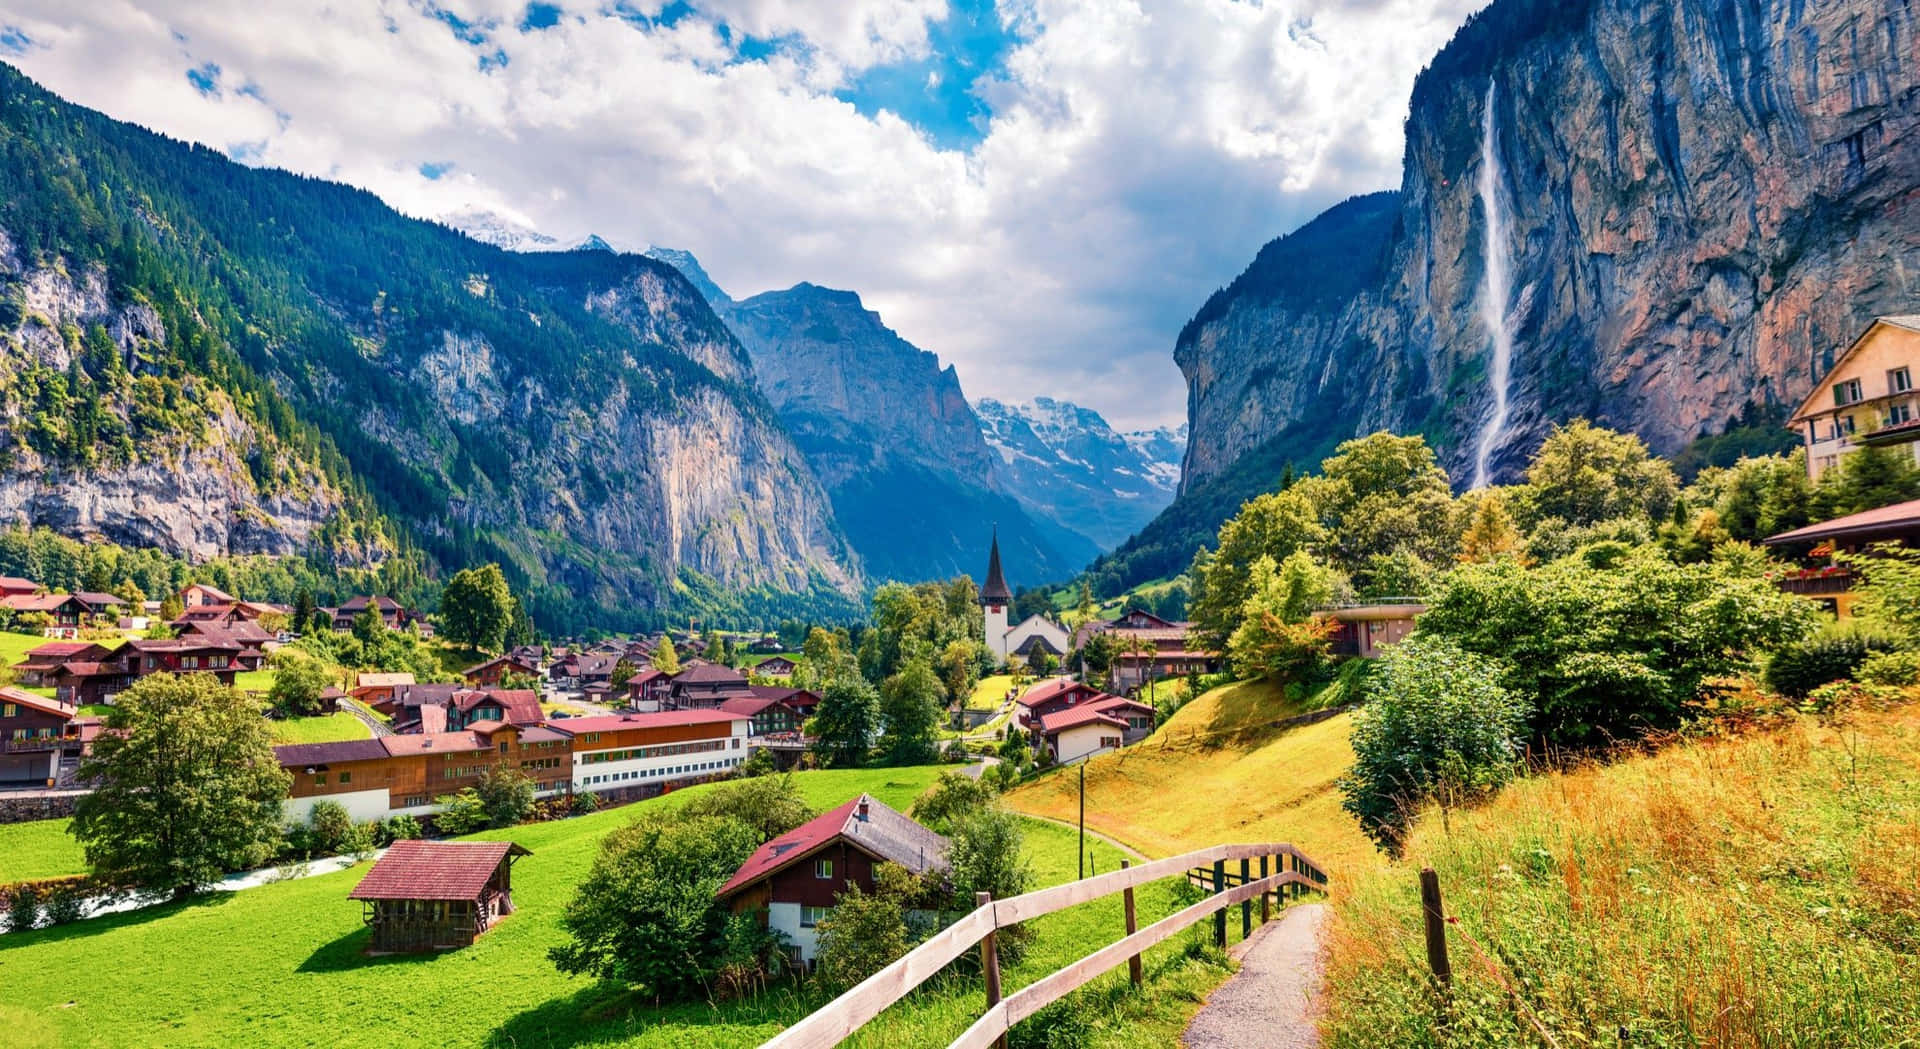 ‘Visiting Switzerland and Enjoying the Enchanting Alpine Beauty’